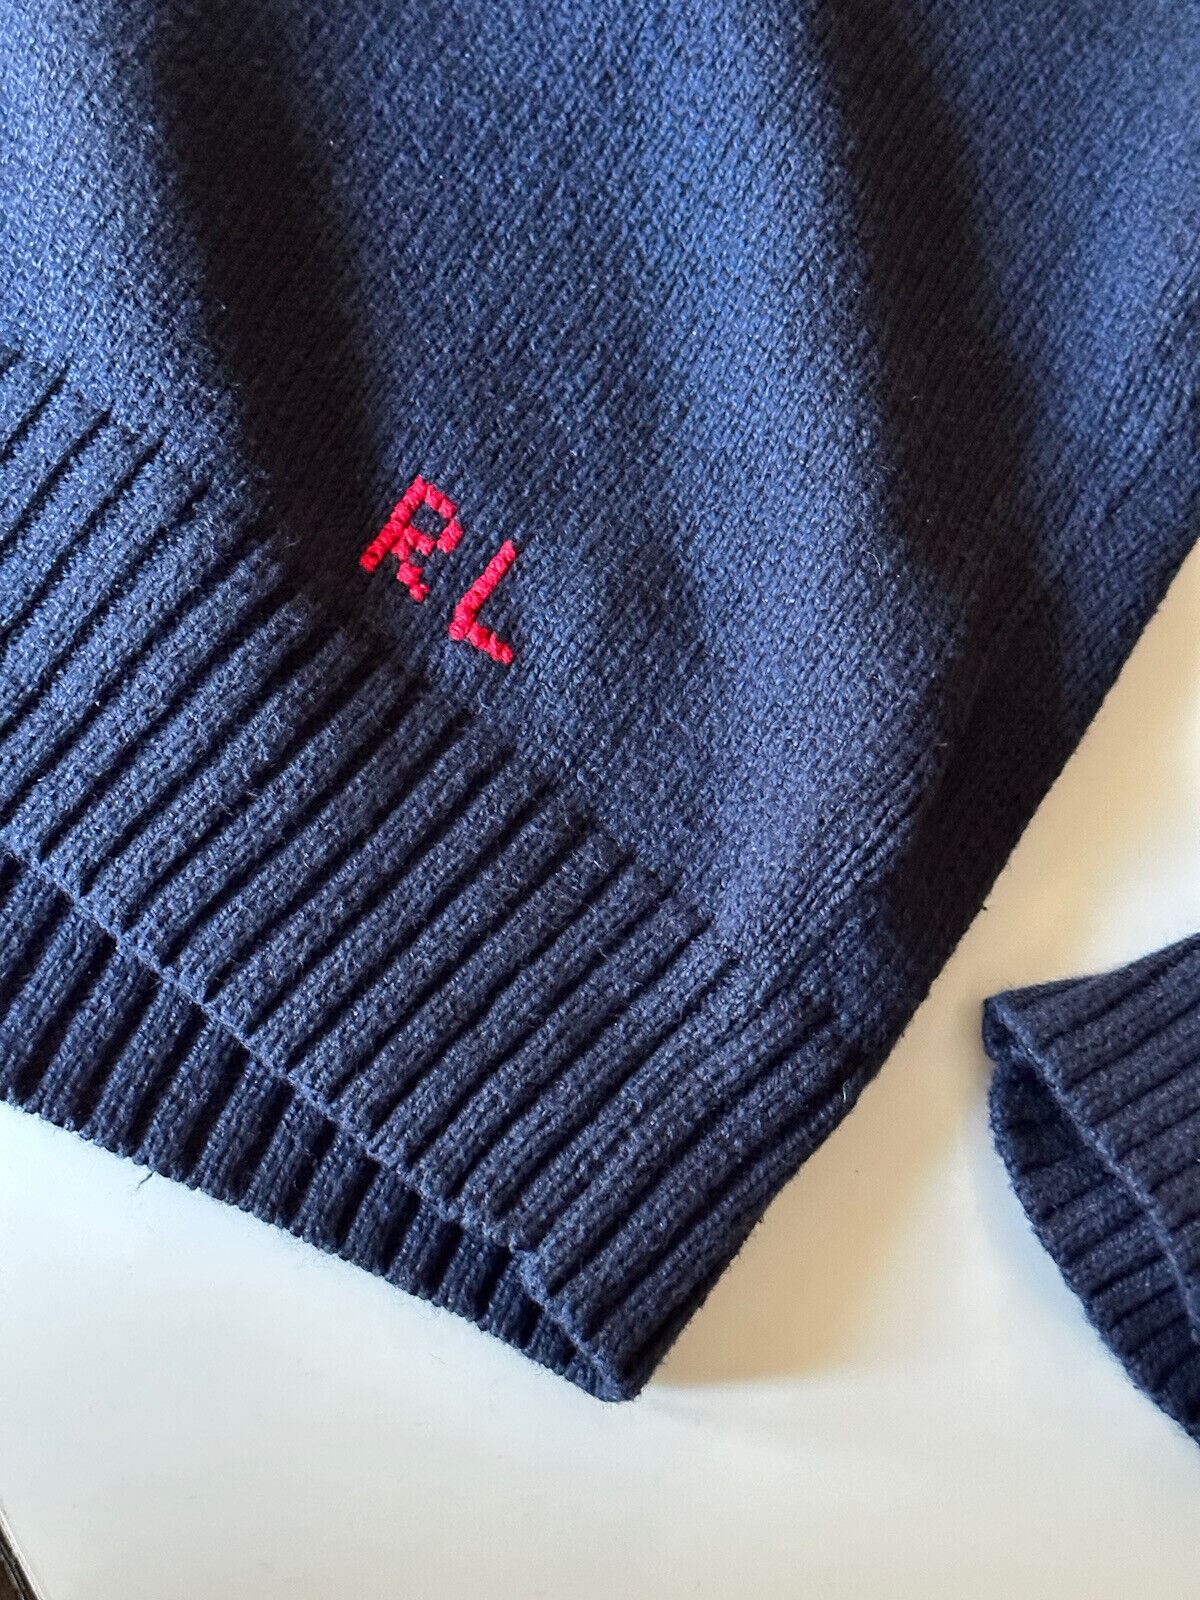 NWT $428 Polo Ralph Lauren Big Pony Bear Cotton/Linen Blue Sweater 2XB